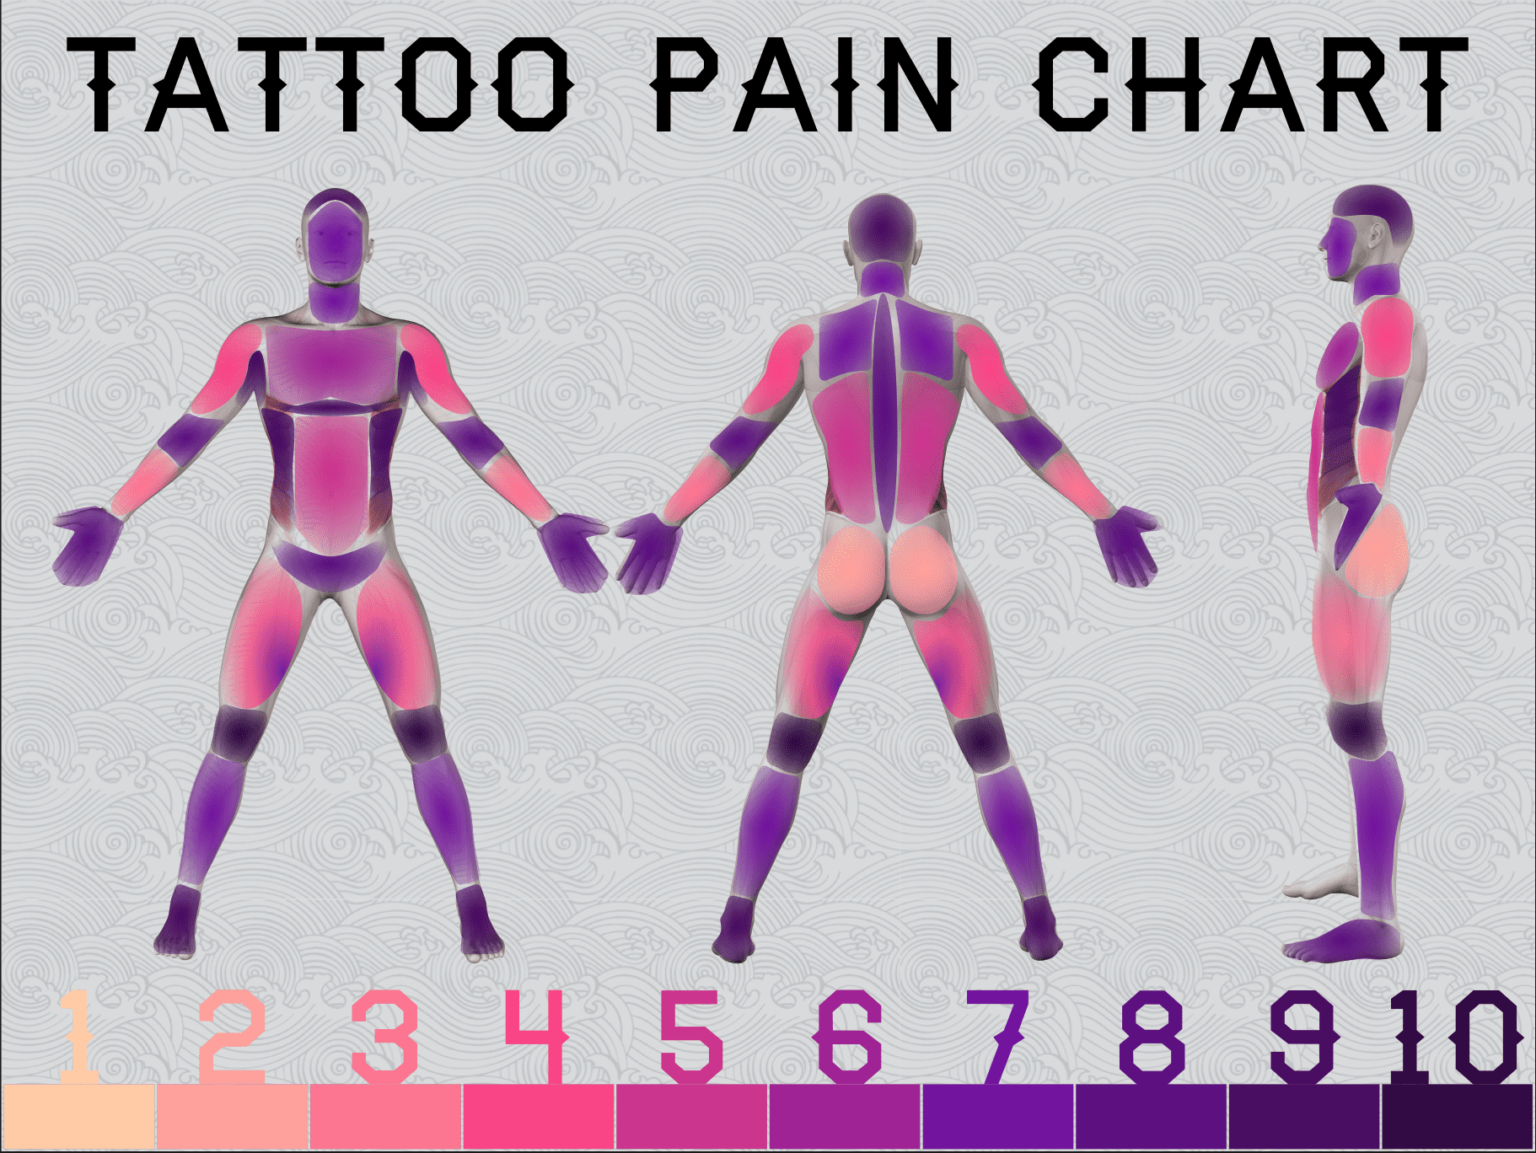 5. Inner Wrist Tattoo Pain: Choosing the Right Design - wide 4